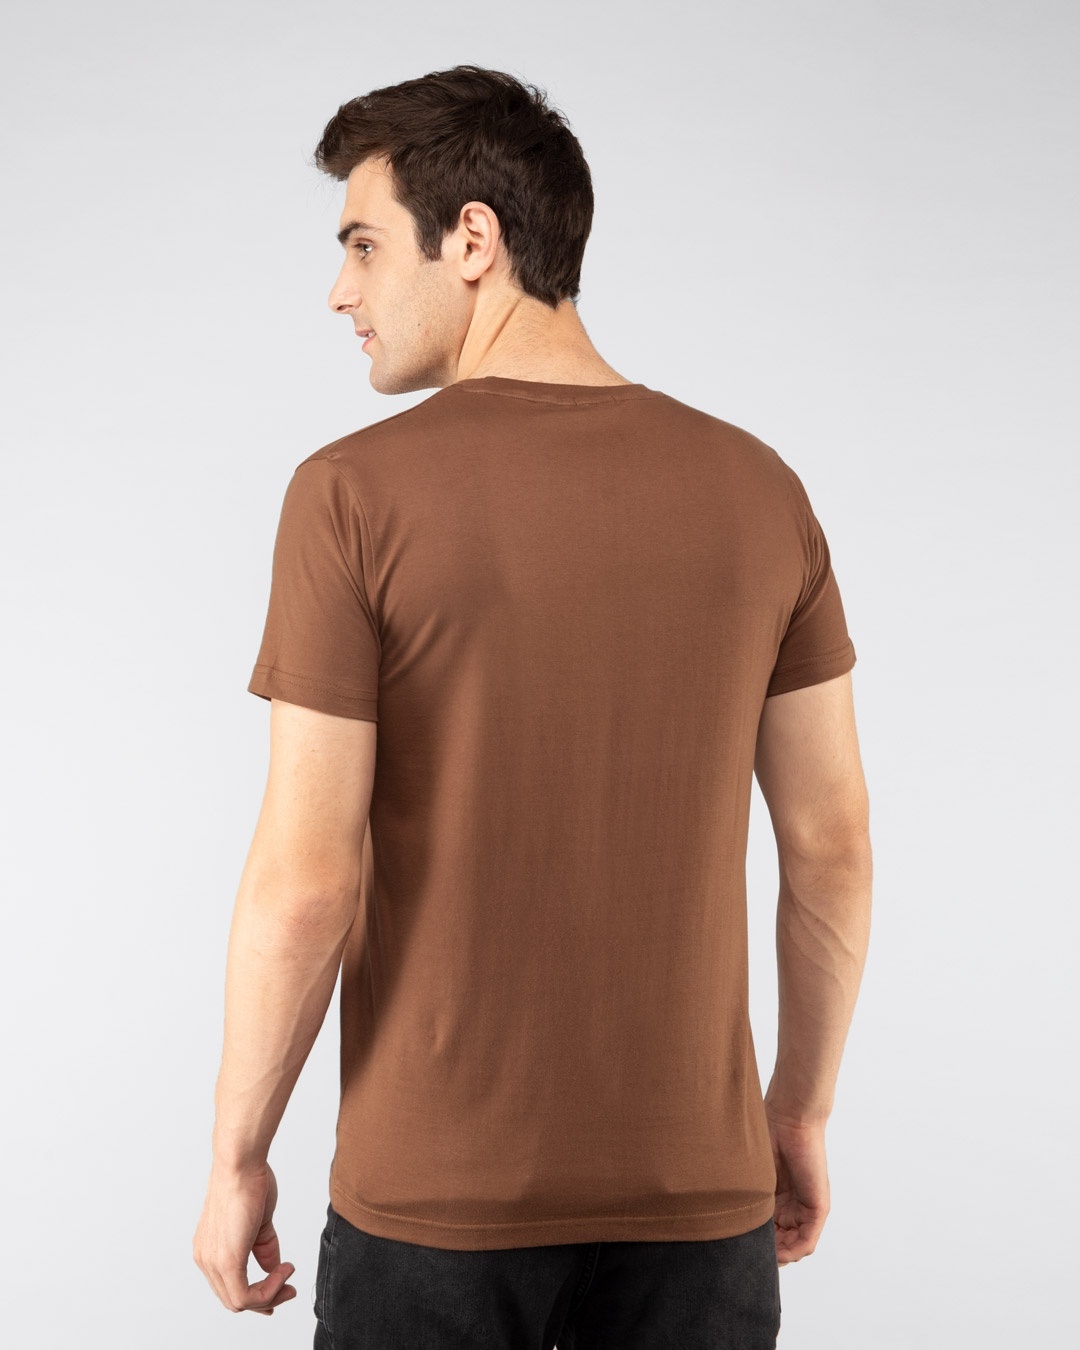 Shop Brown Half Sleeve T-Shirt